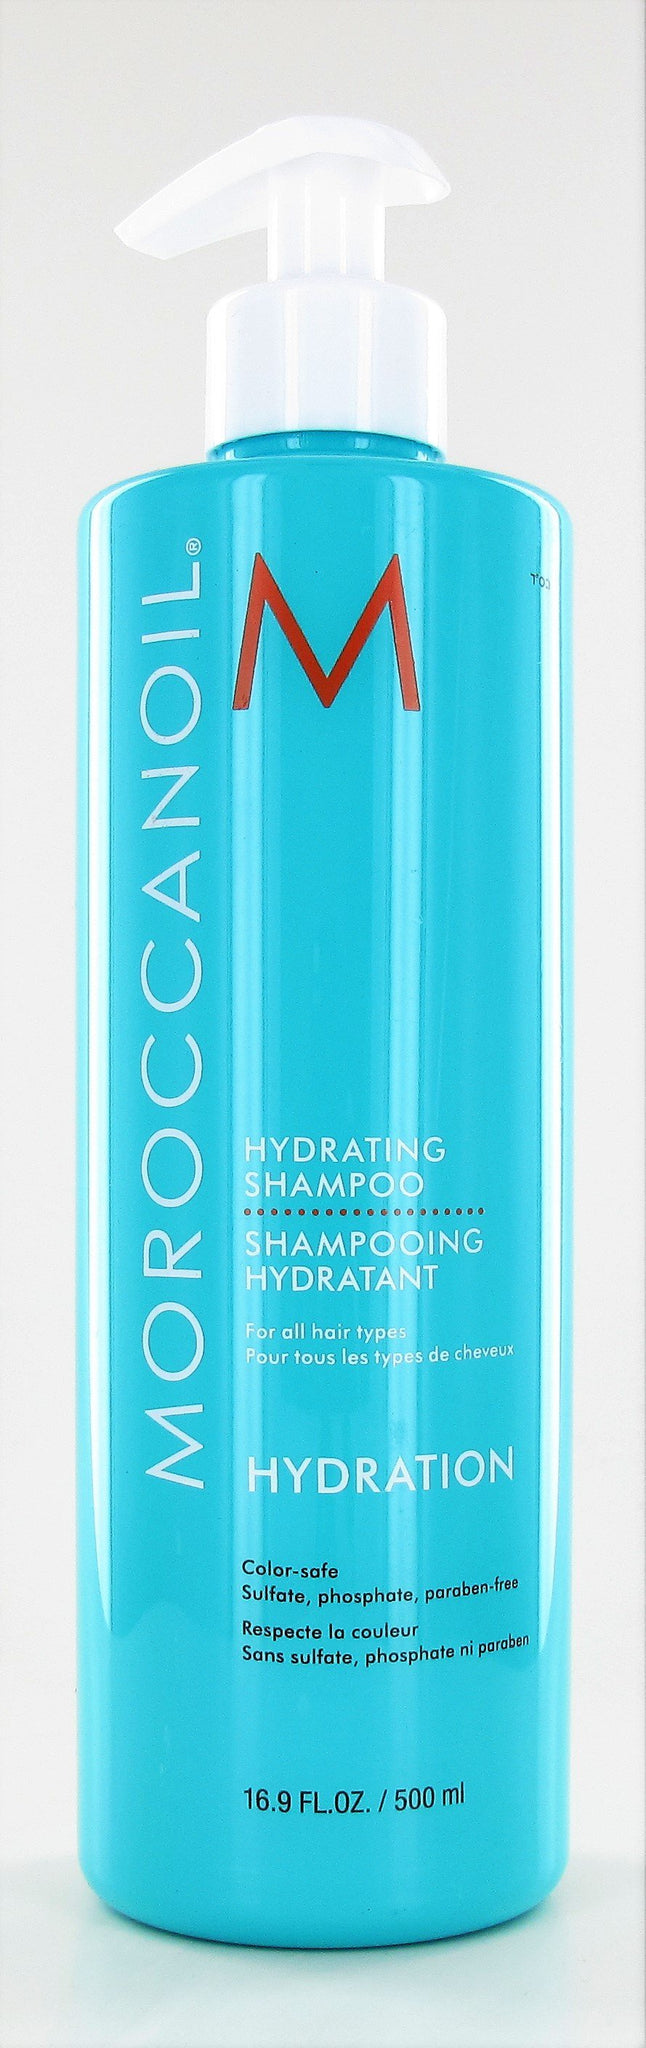 MoroccanOil Hydrating Shampoo 16.9 oz